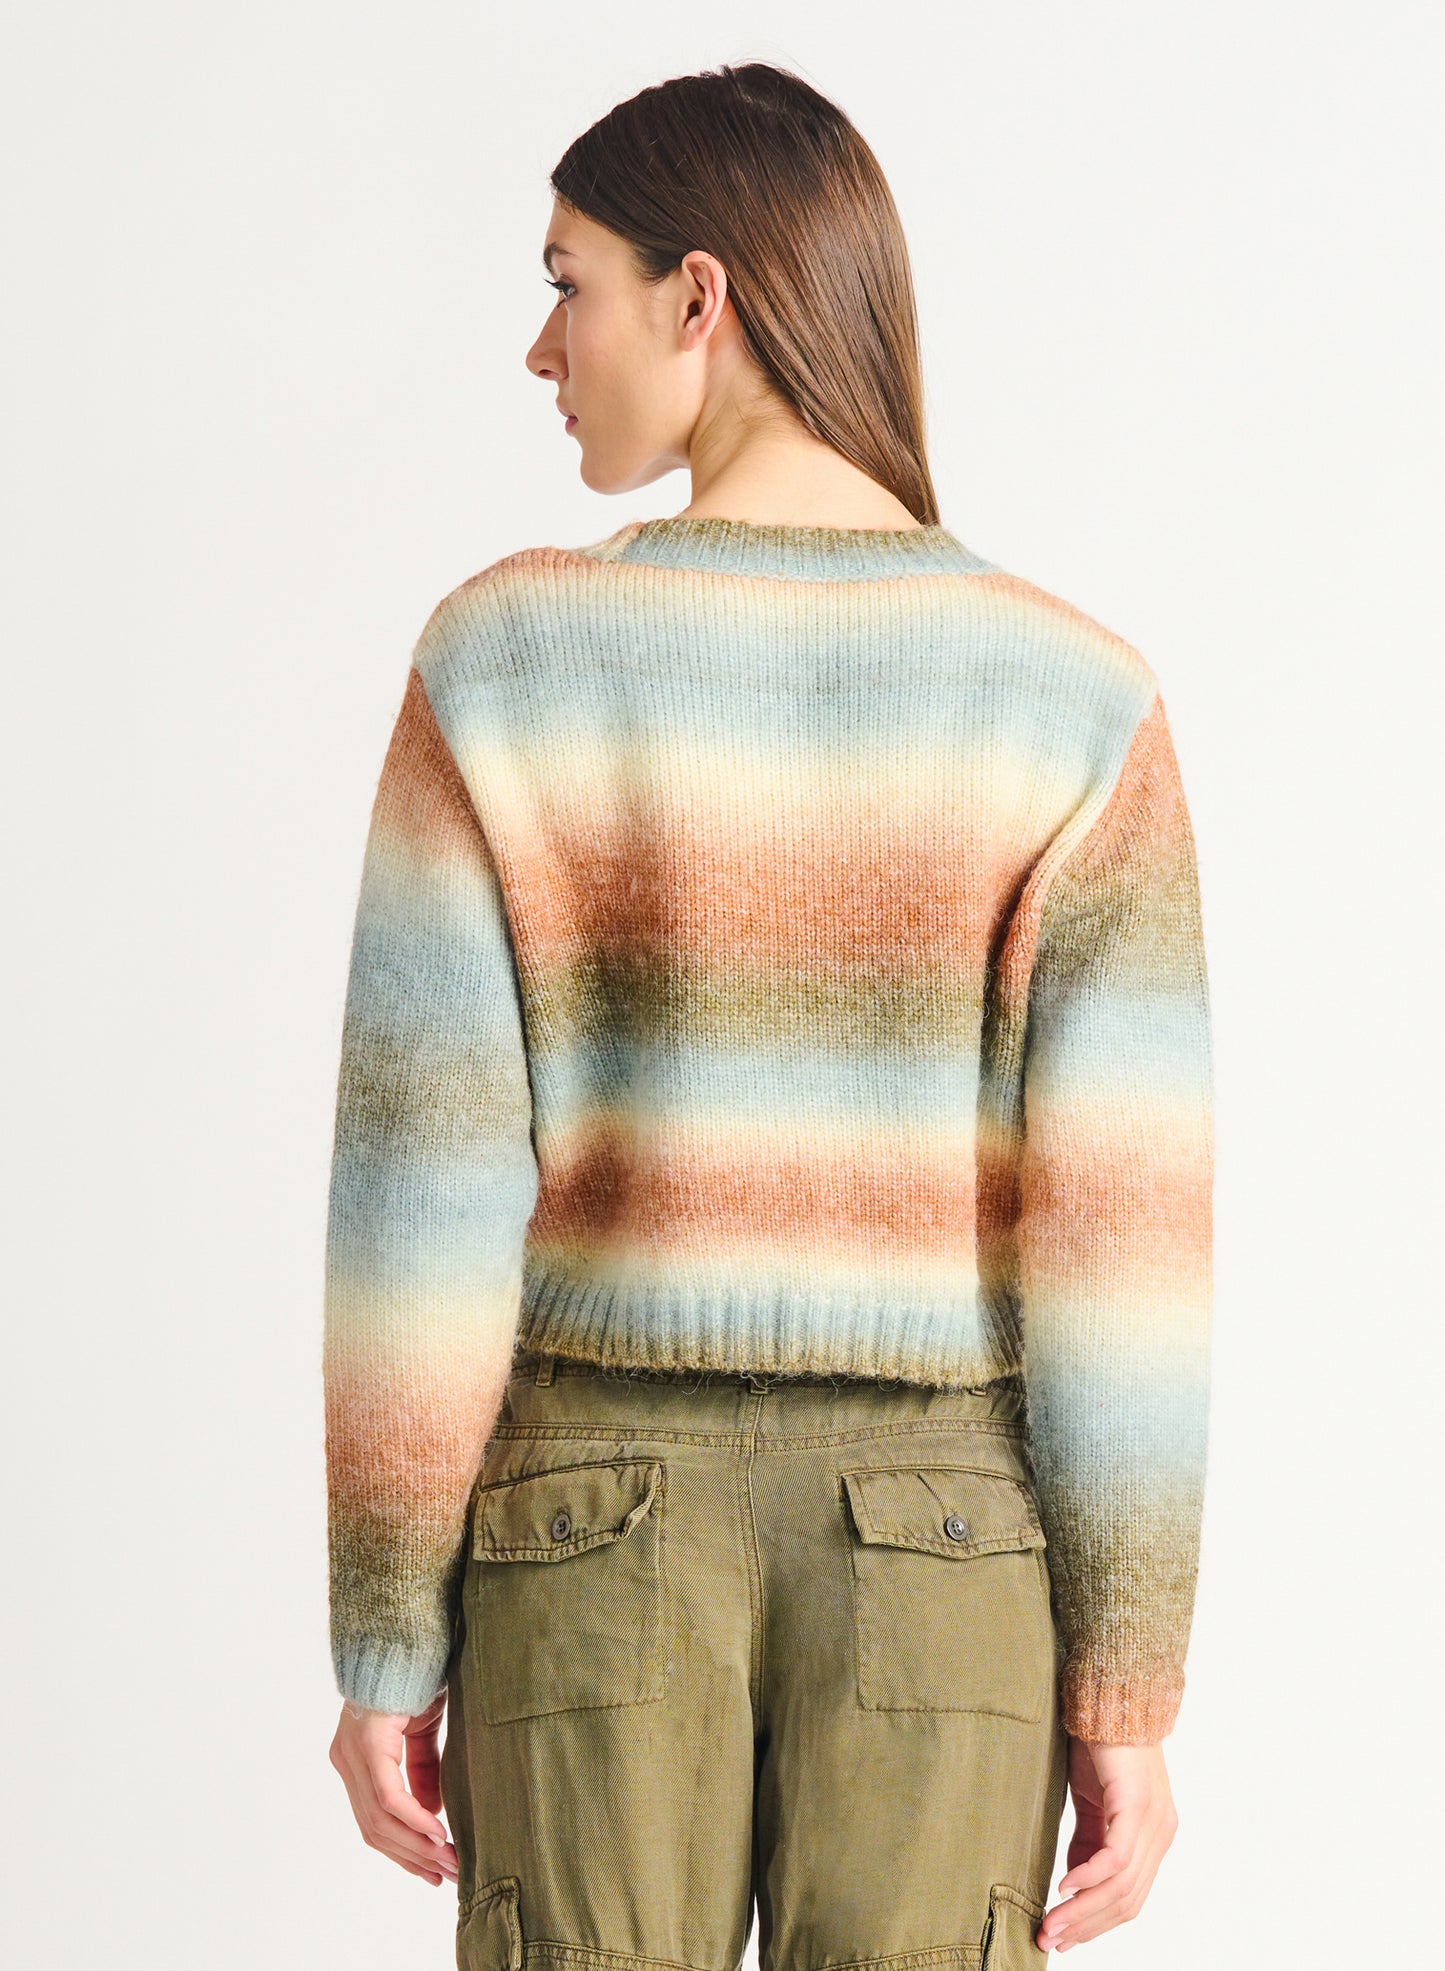 Gradient Sweater